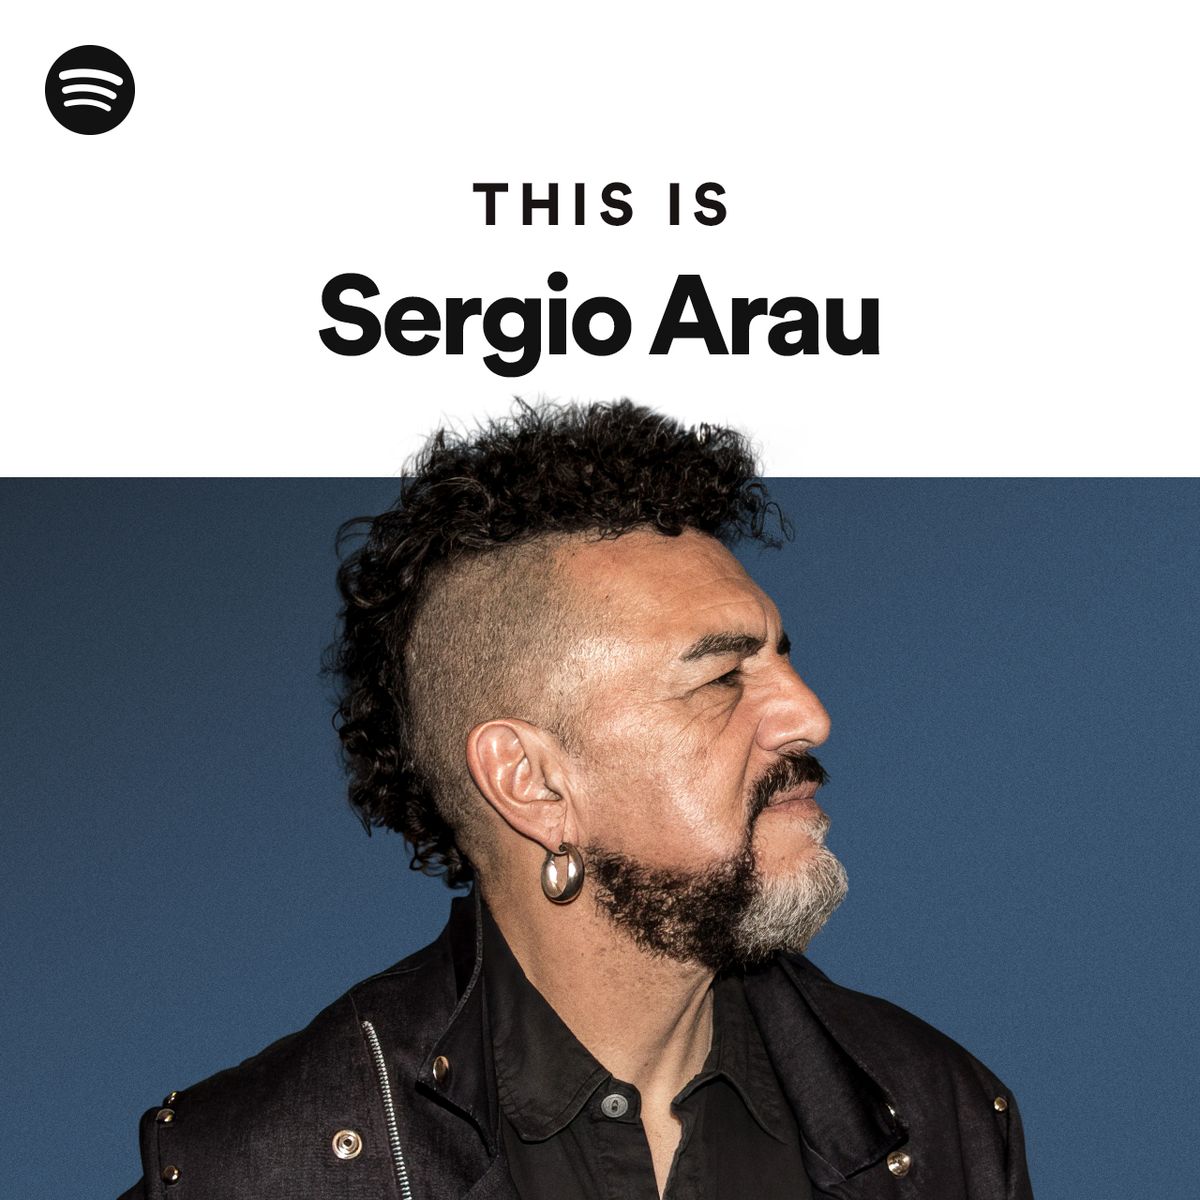 Sergio Arau